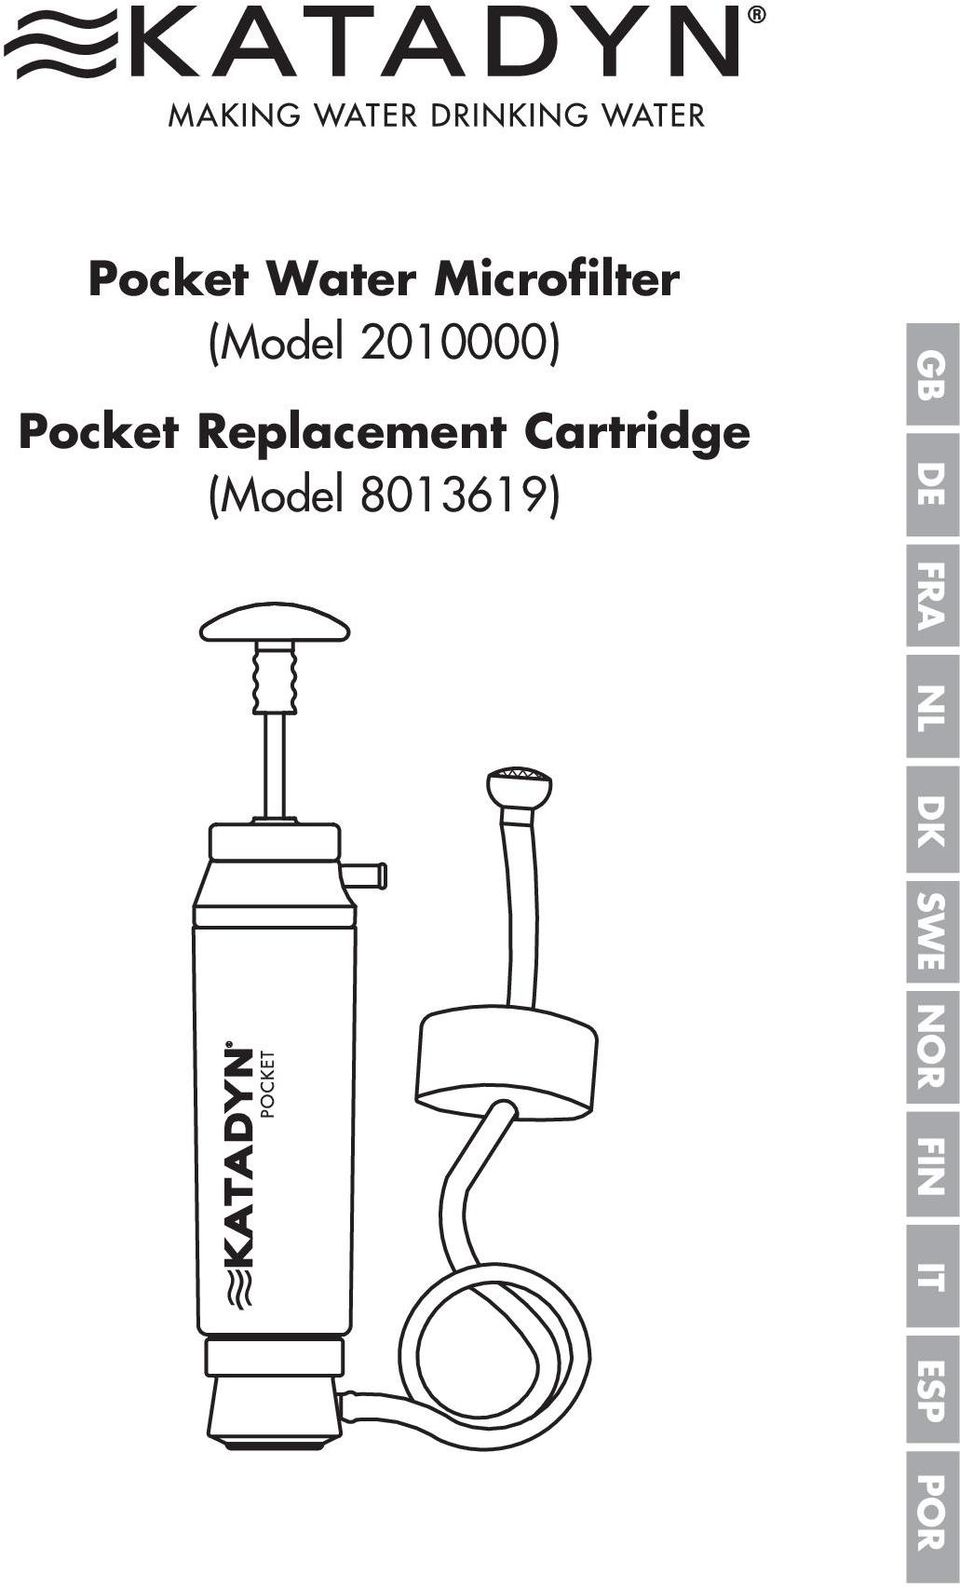 Replacement Cartridge (Model